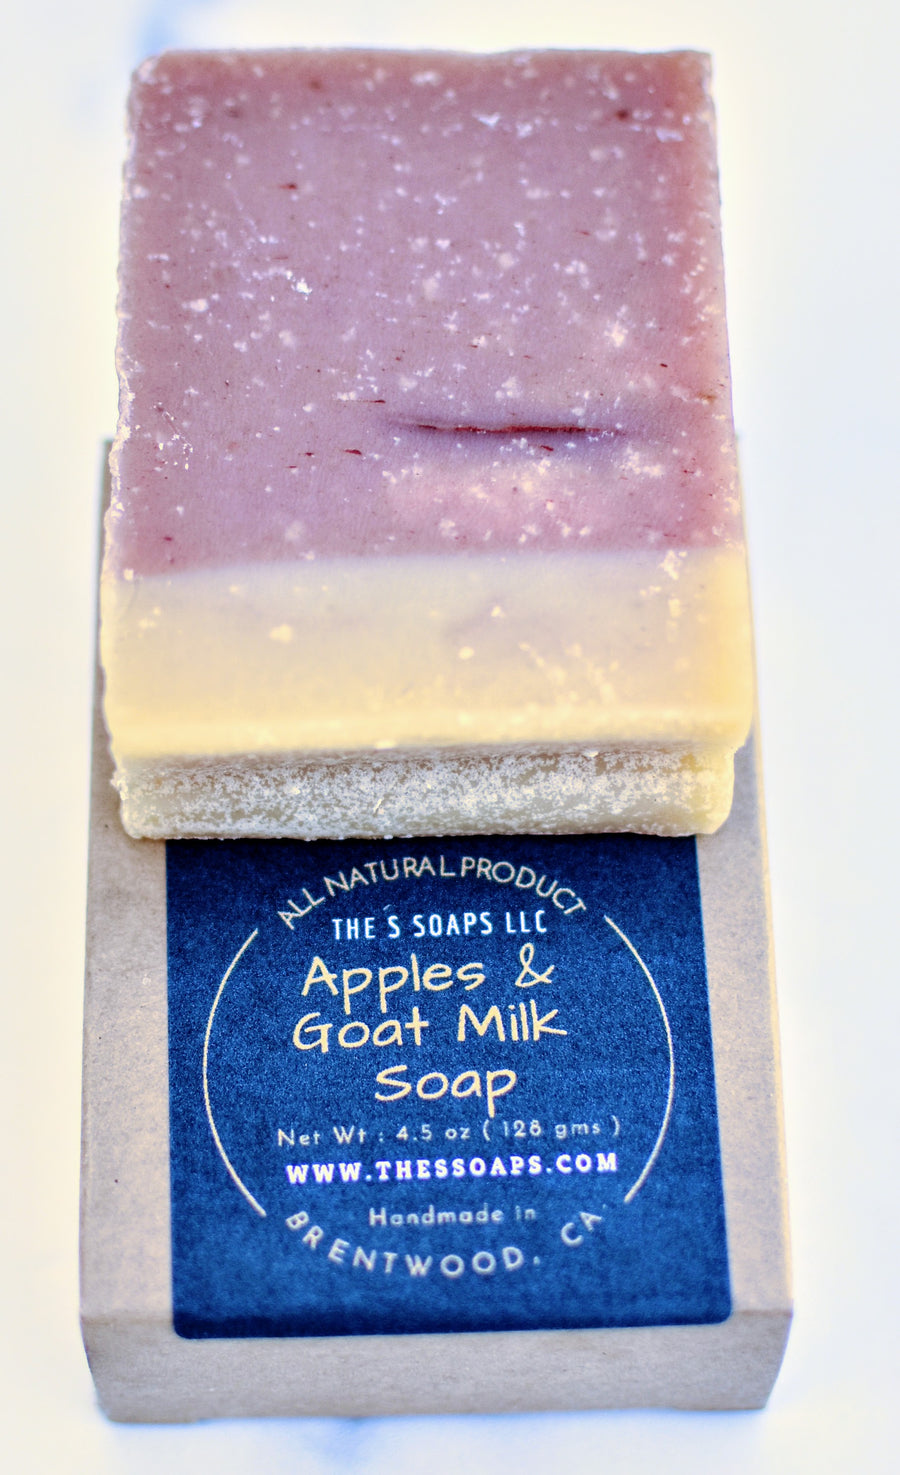 Apples & Goat Milk Soap